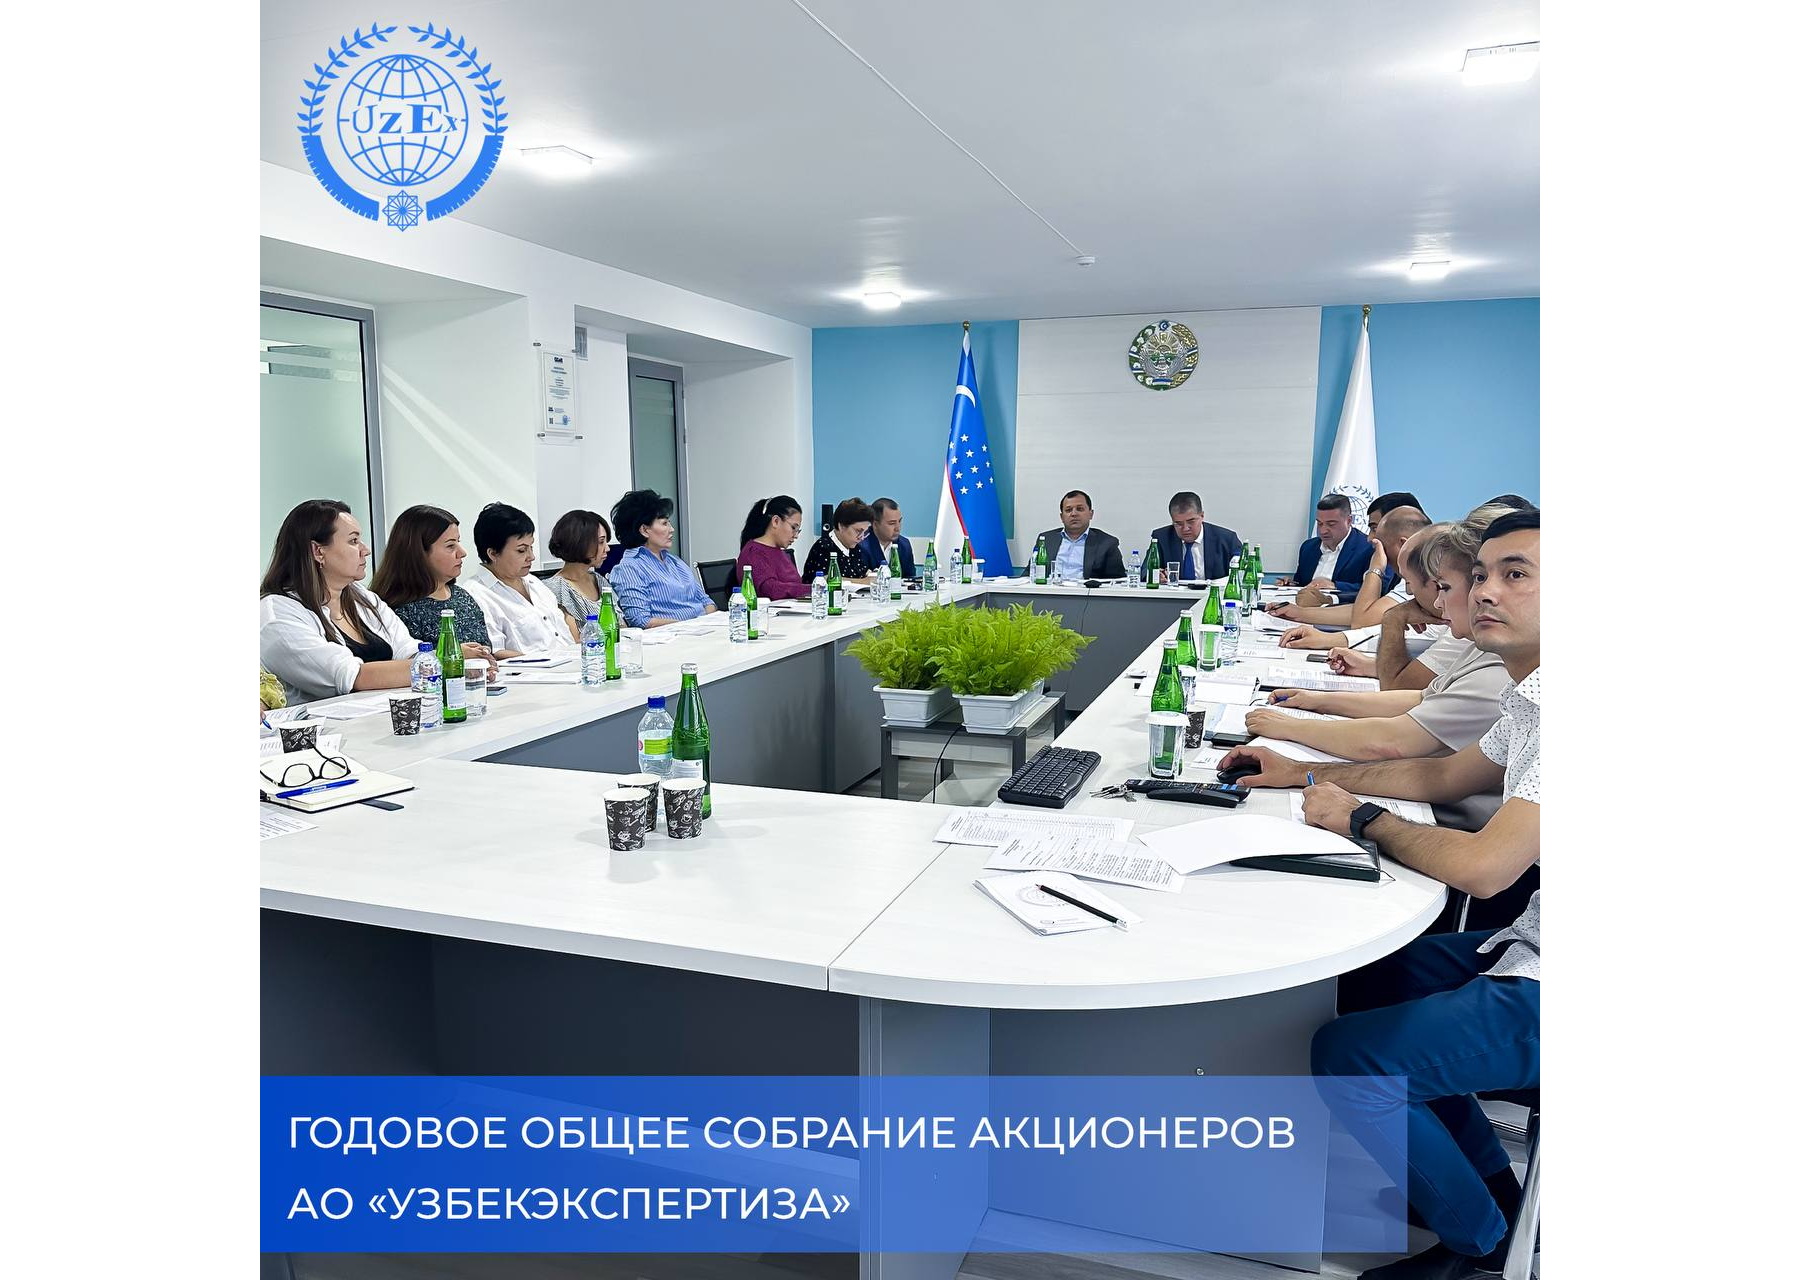 Annual General Meeting of Shareholders of JSC "Uzbekexpertiza"